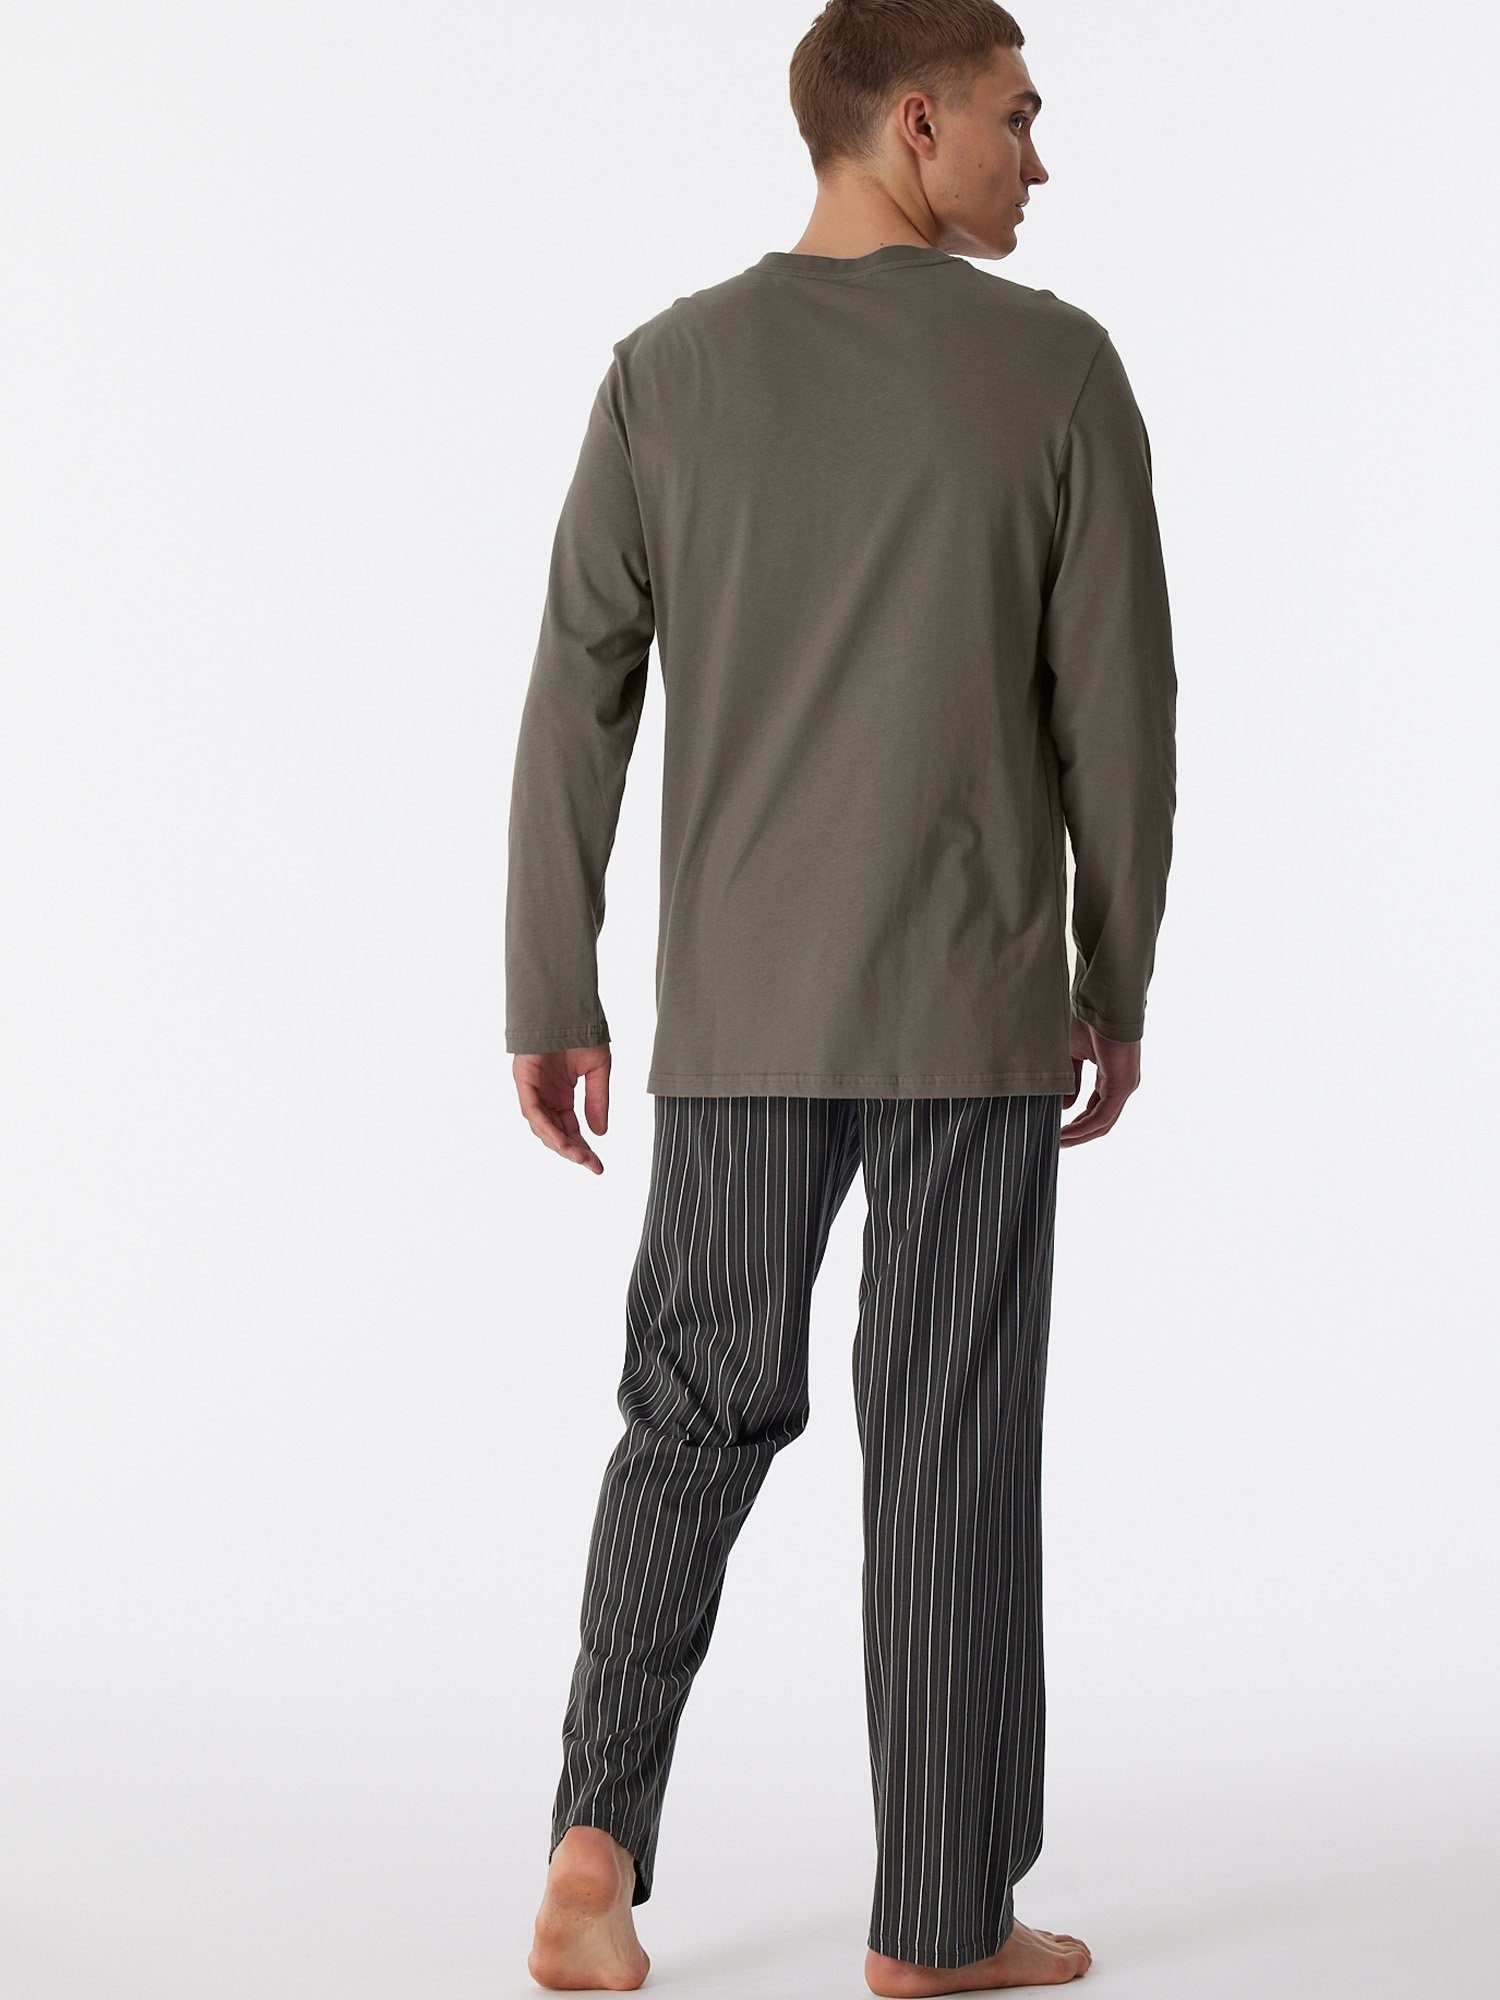 Schiesser Pyjama Comfort pyjama schlafanzug taupe schlafmode Nightwear